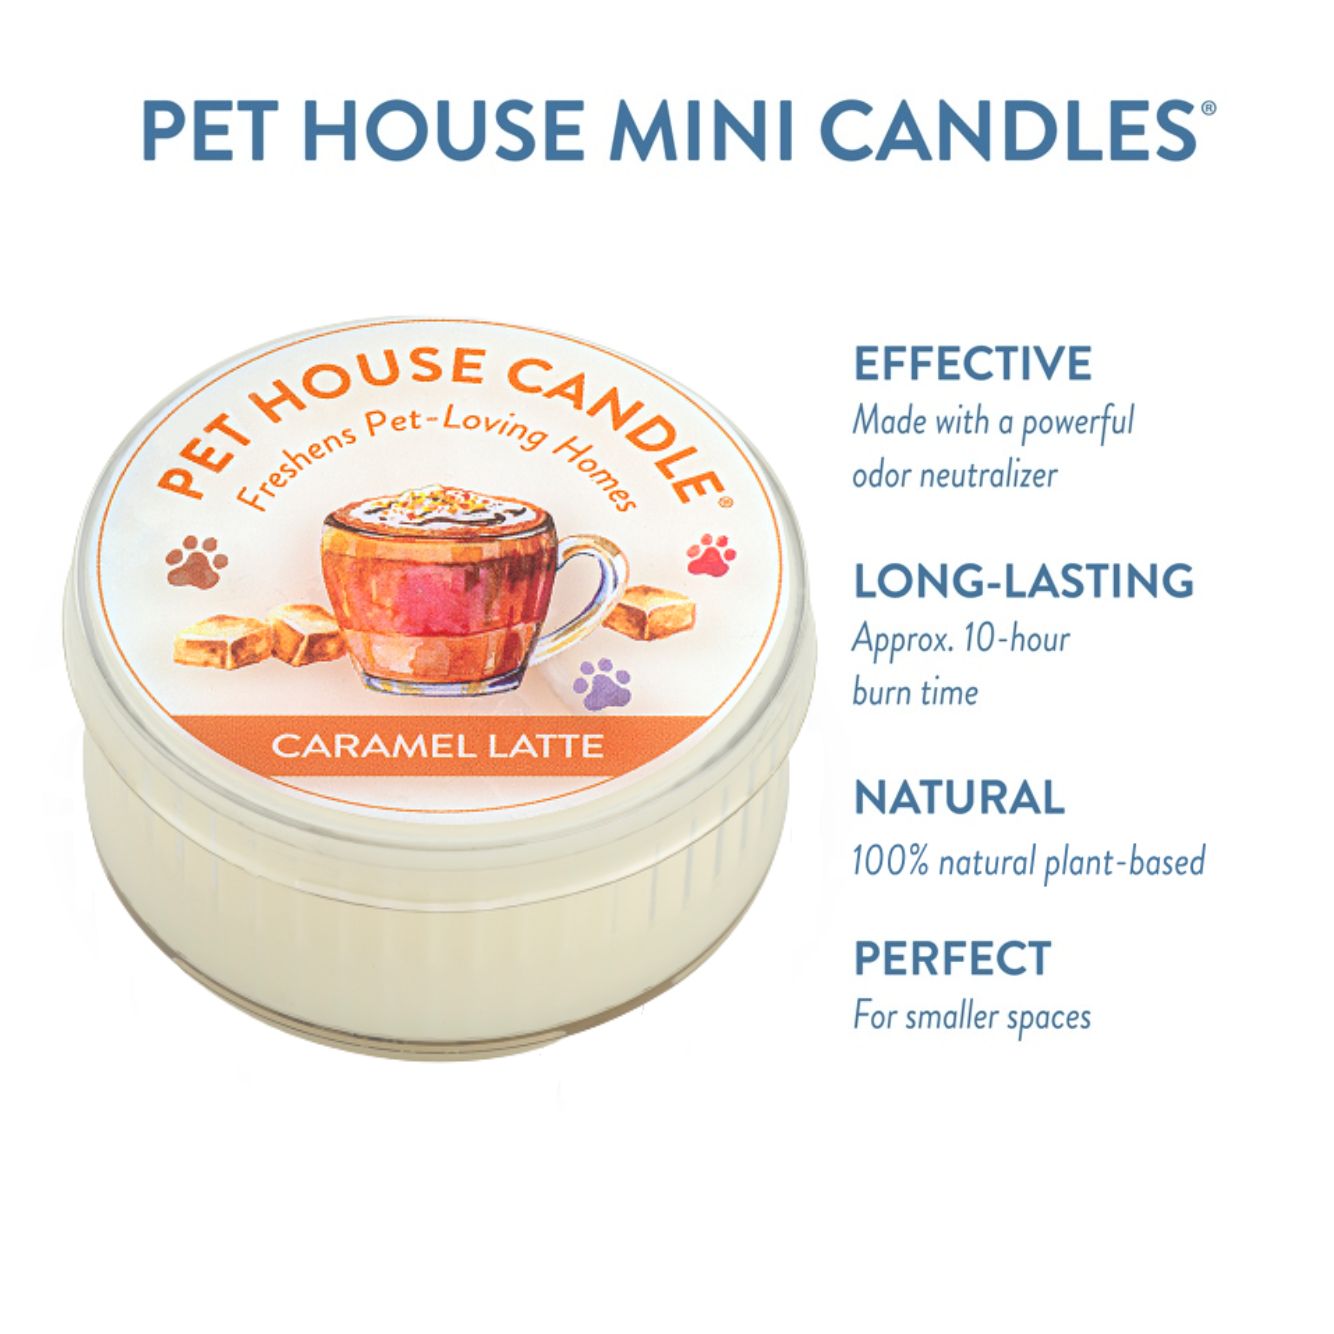 Caramel Latte Mini Candle Infographics